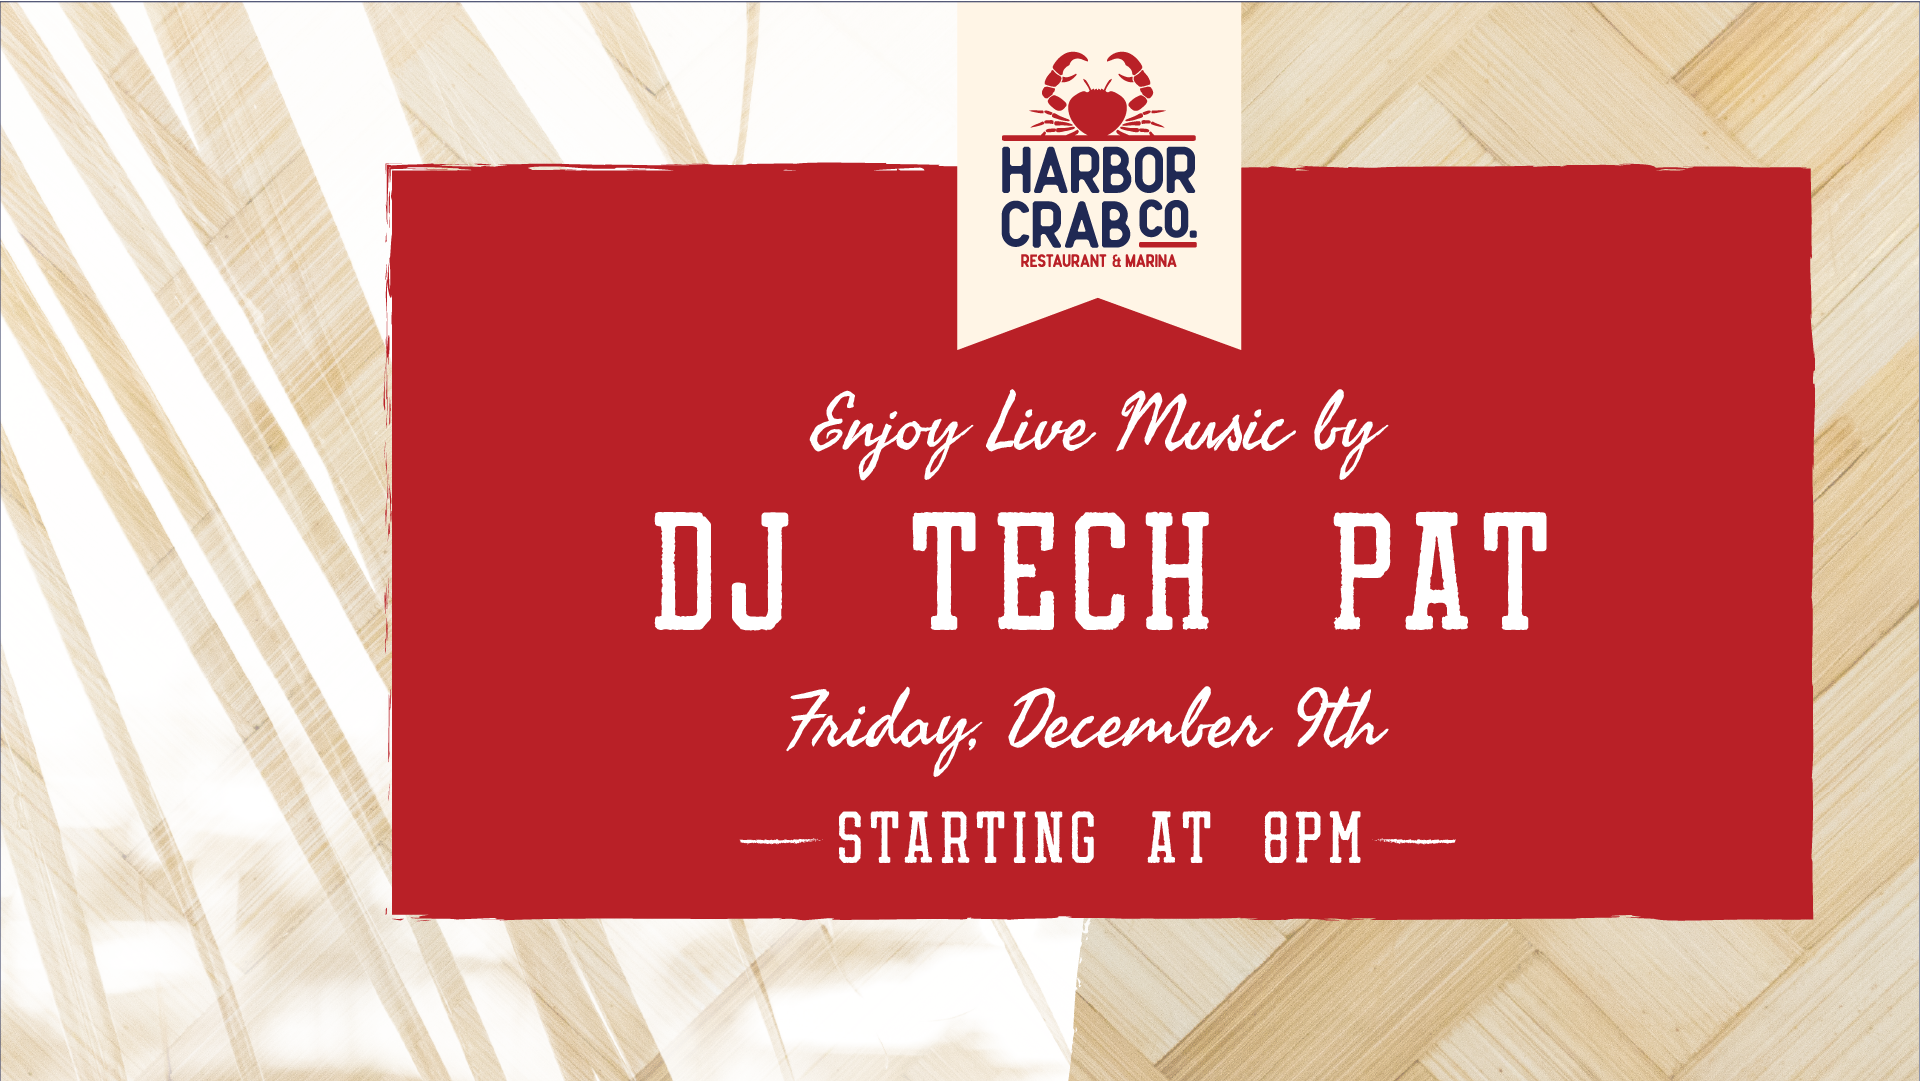 Flyer for DJ Tech Pat on Friday, Dec. 9th